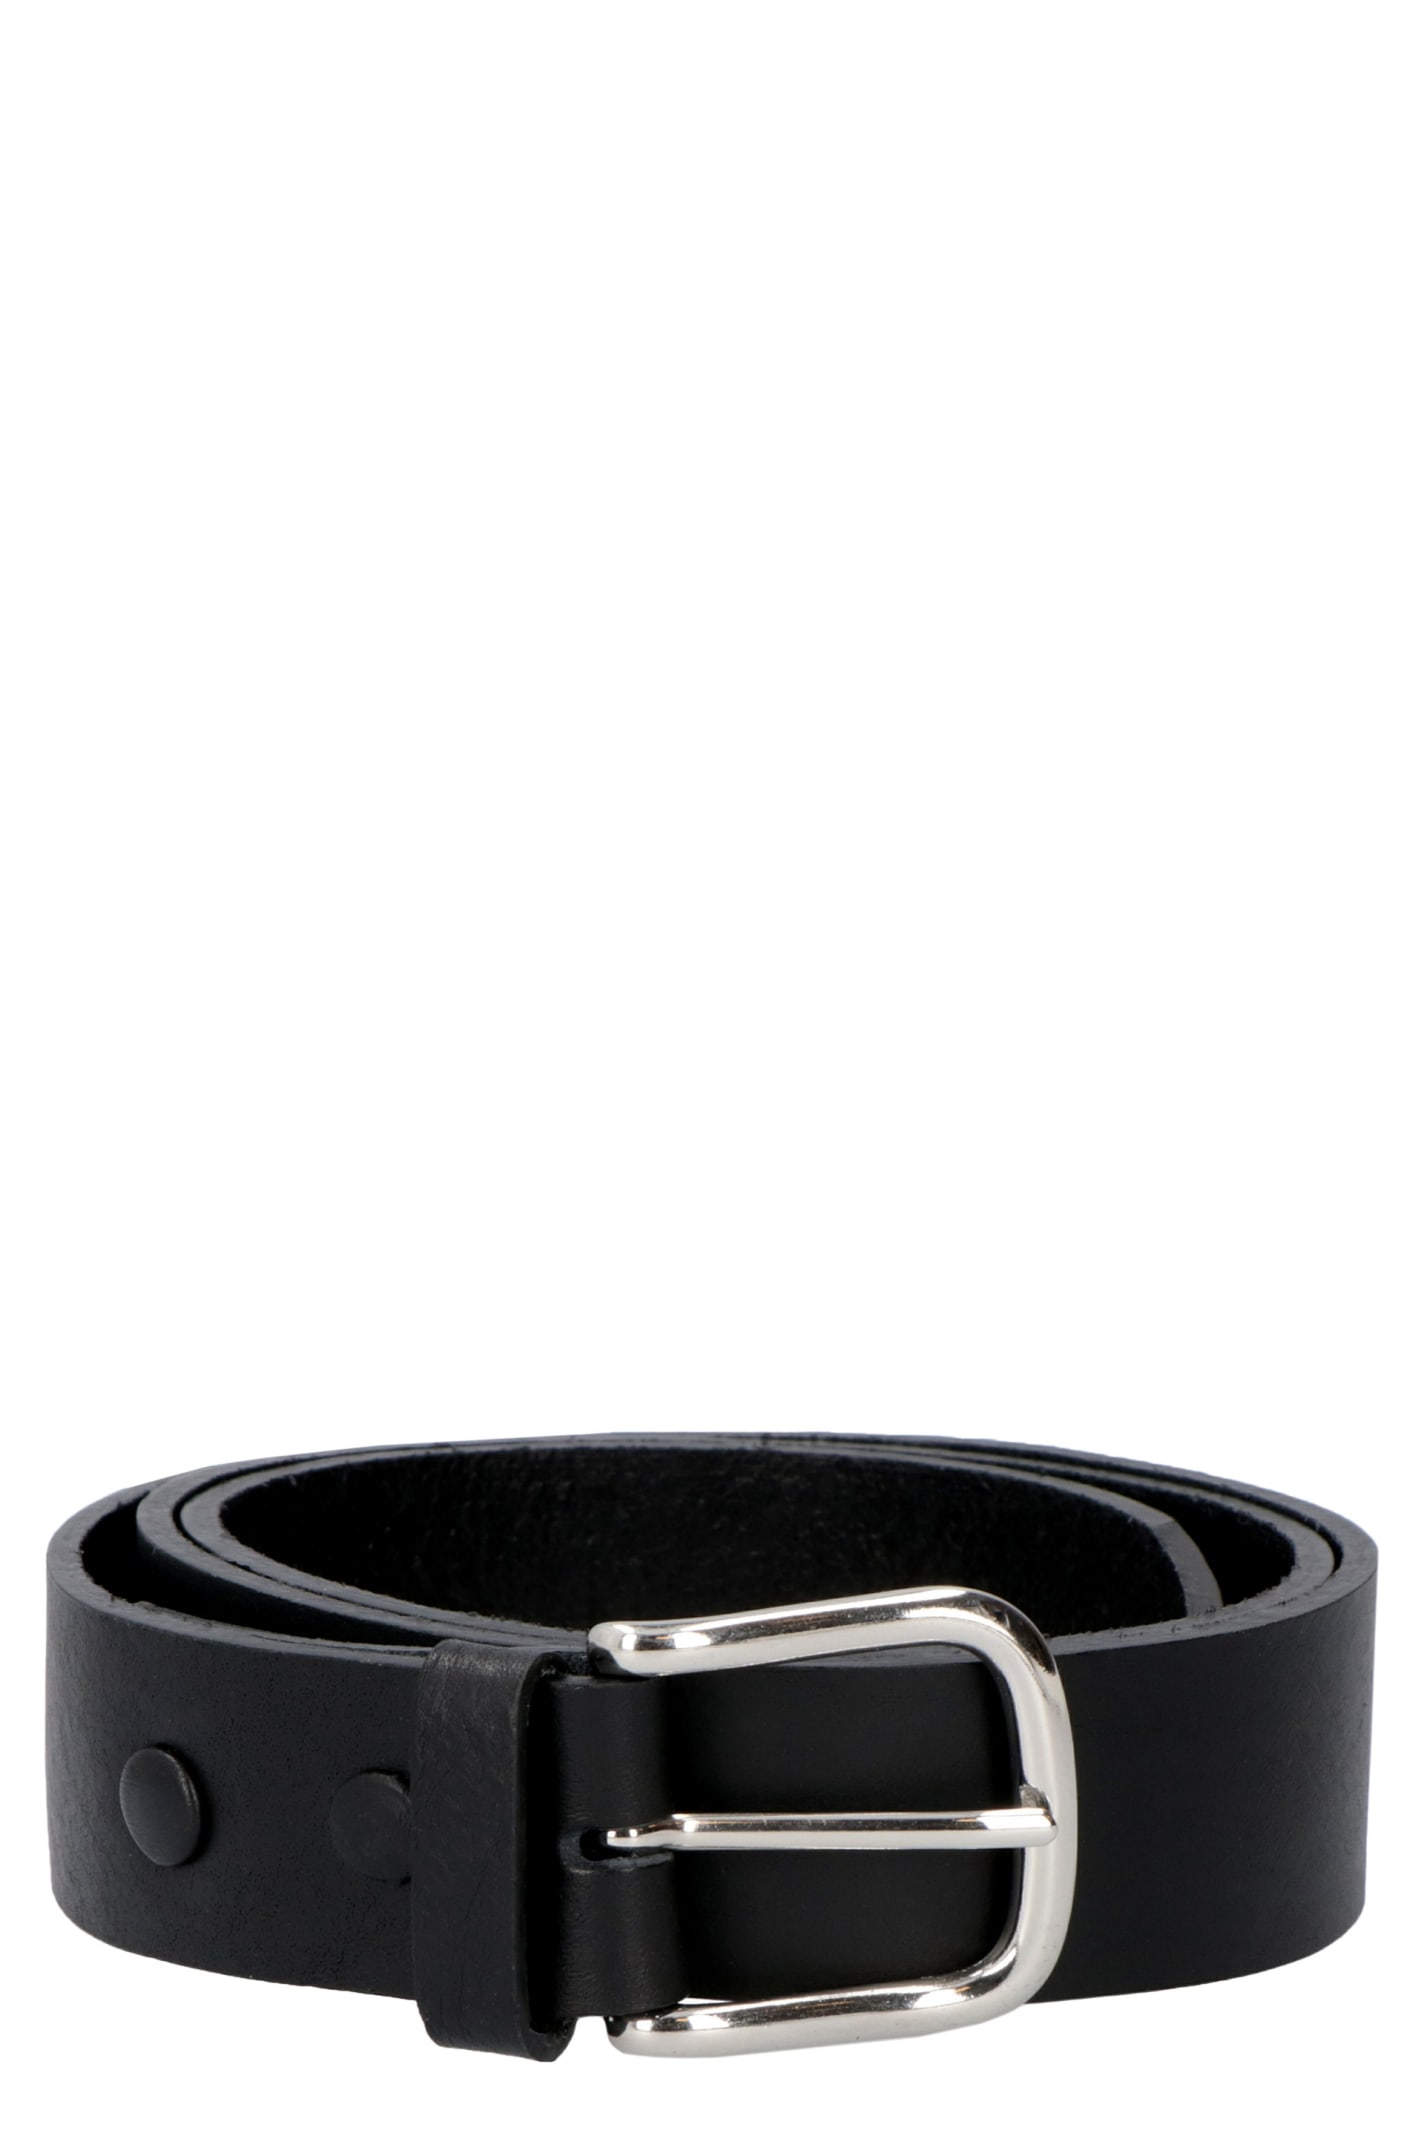 Ami Alexandre Mattiussi Leather Belt In Black